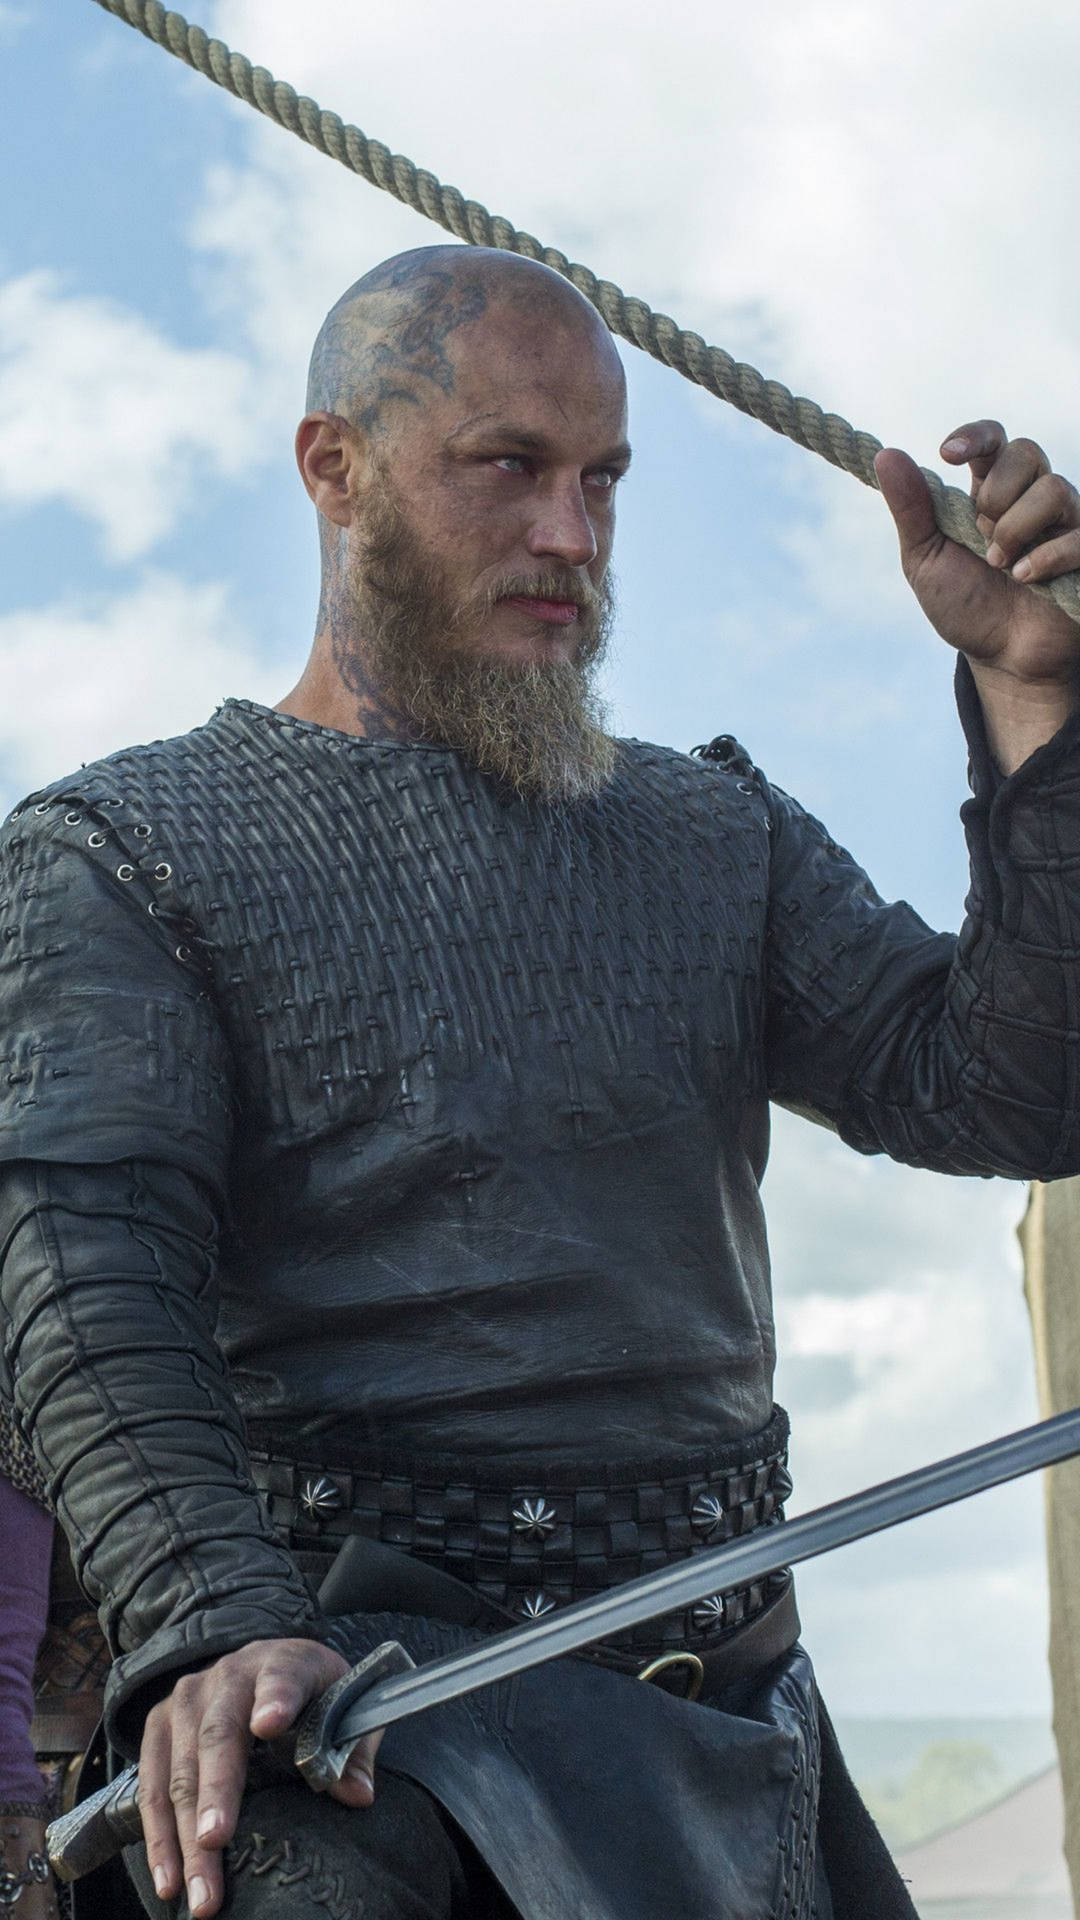 Download Ragnar Lothbrok 4k Vikings Wielding Sword Wallpaper | Wallpapers .com